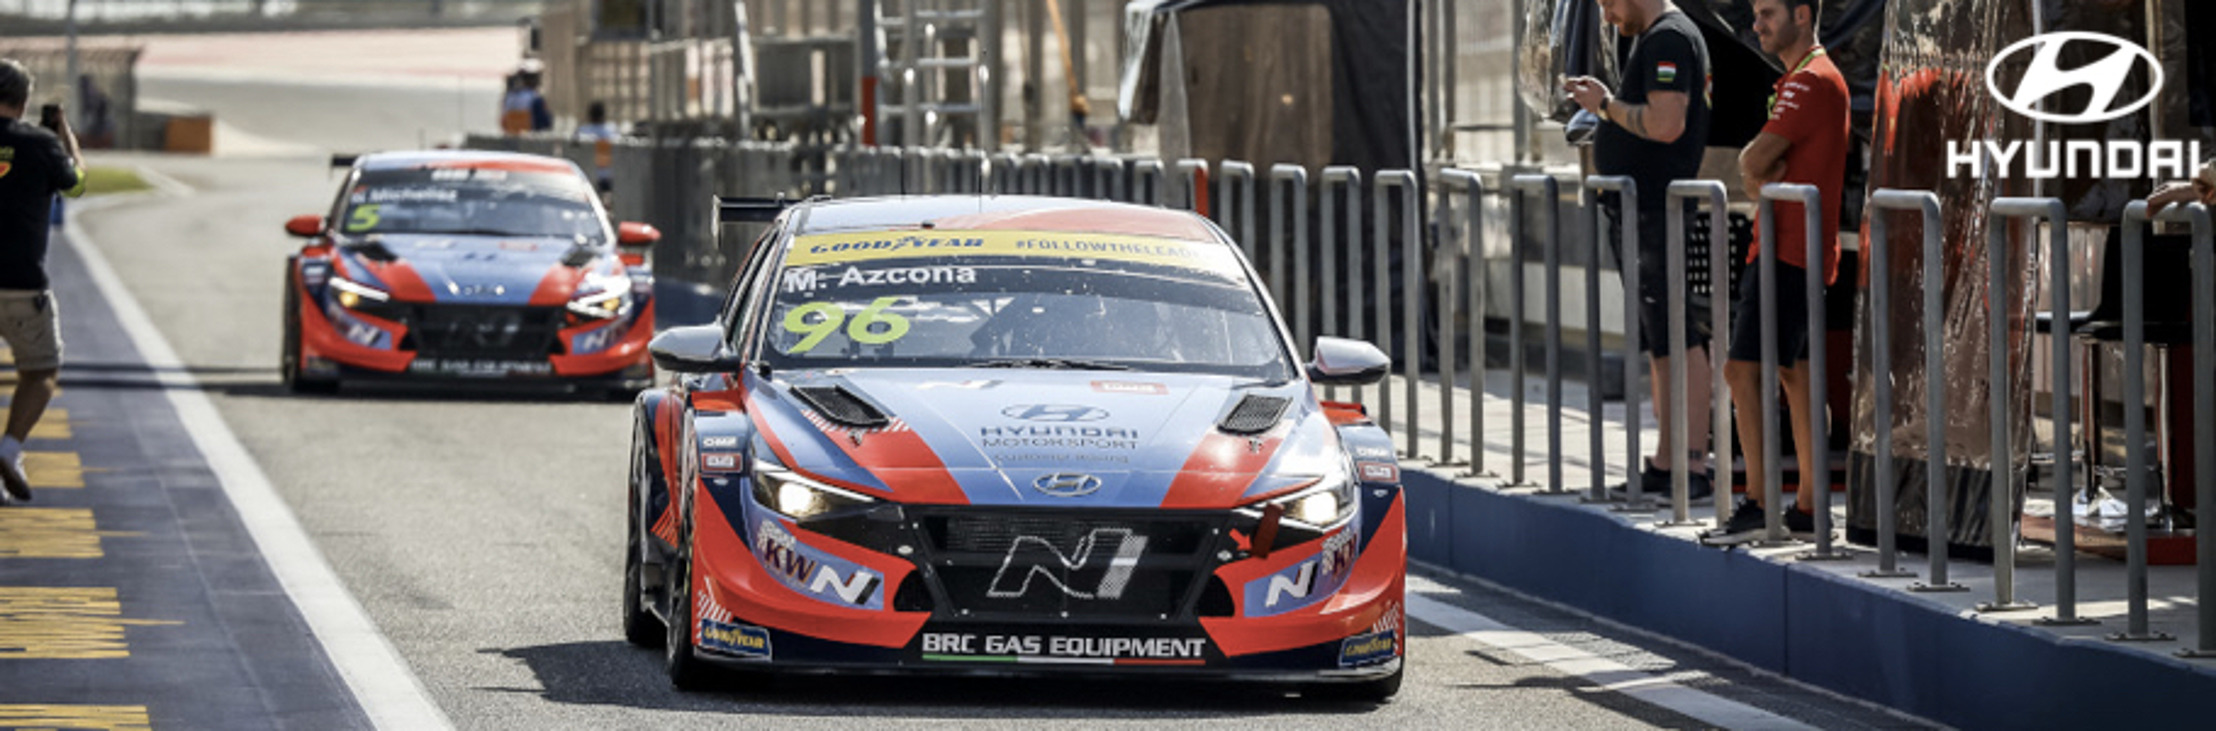 Hyundai Motorsport Customer Racing se une al TCR World Tour